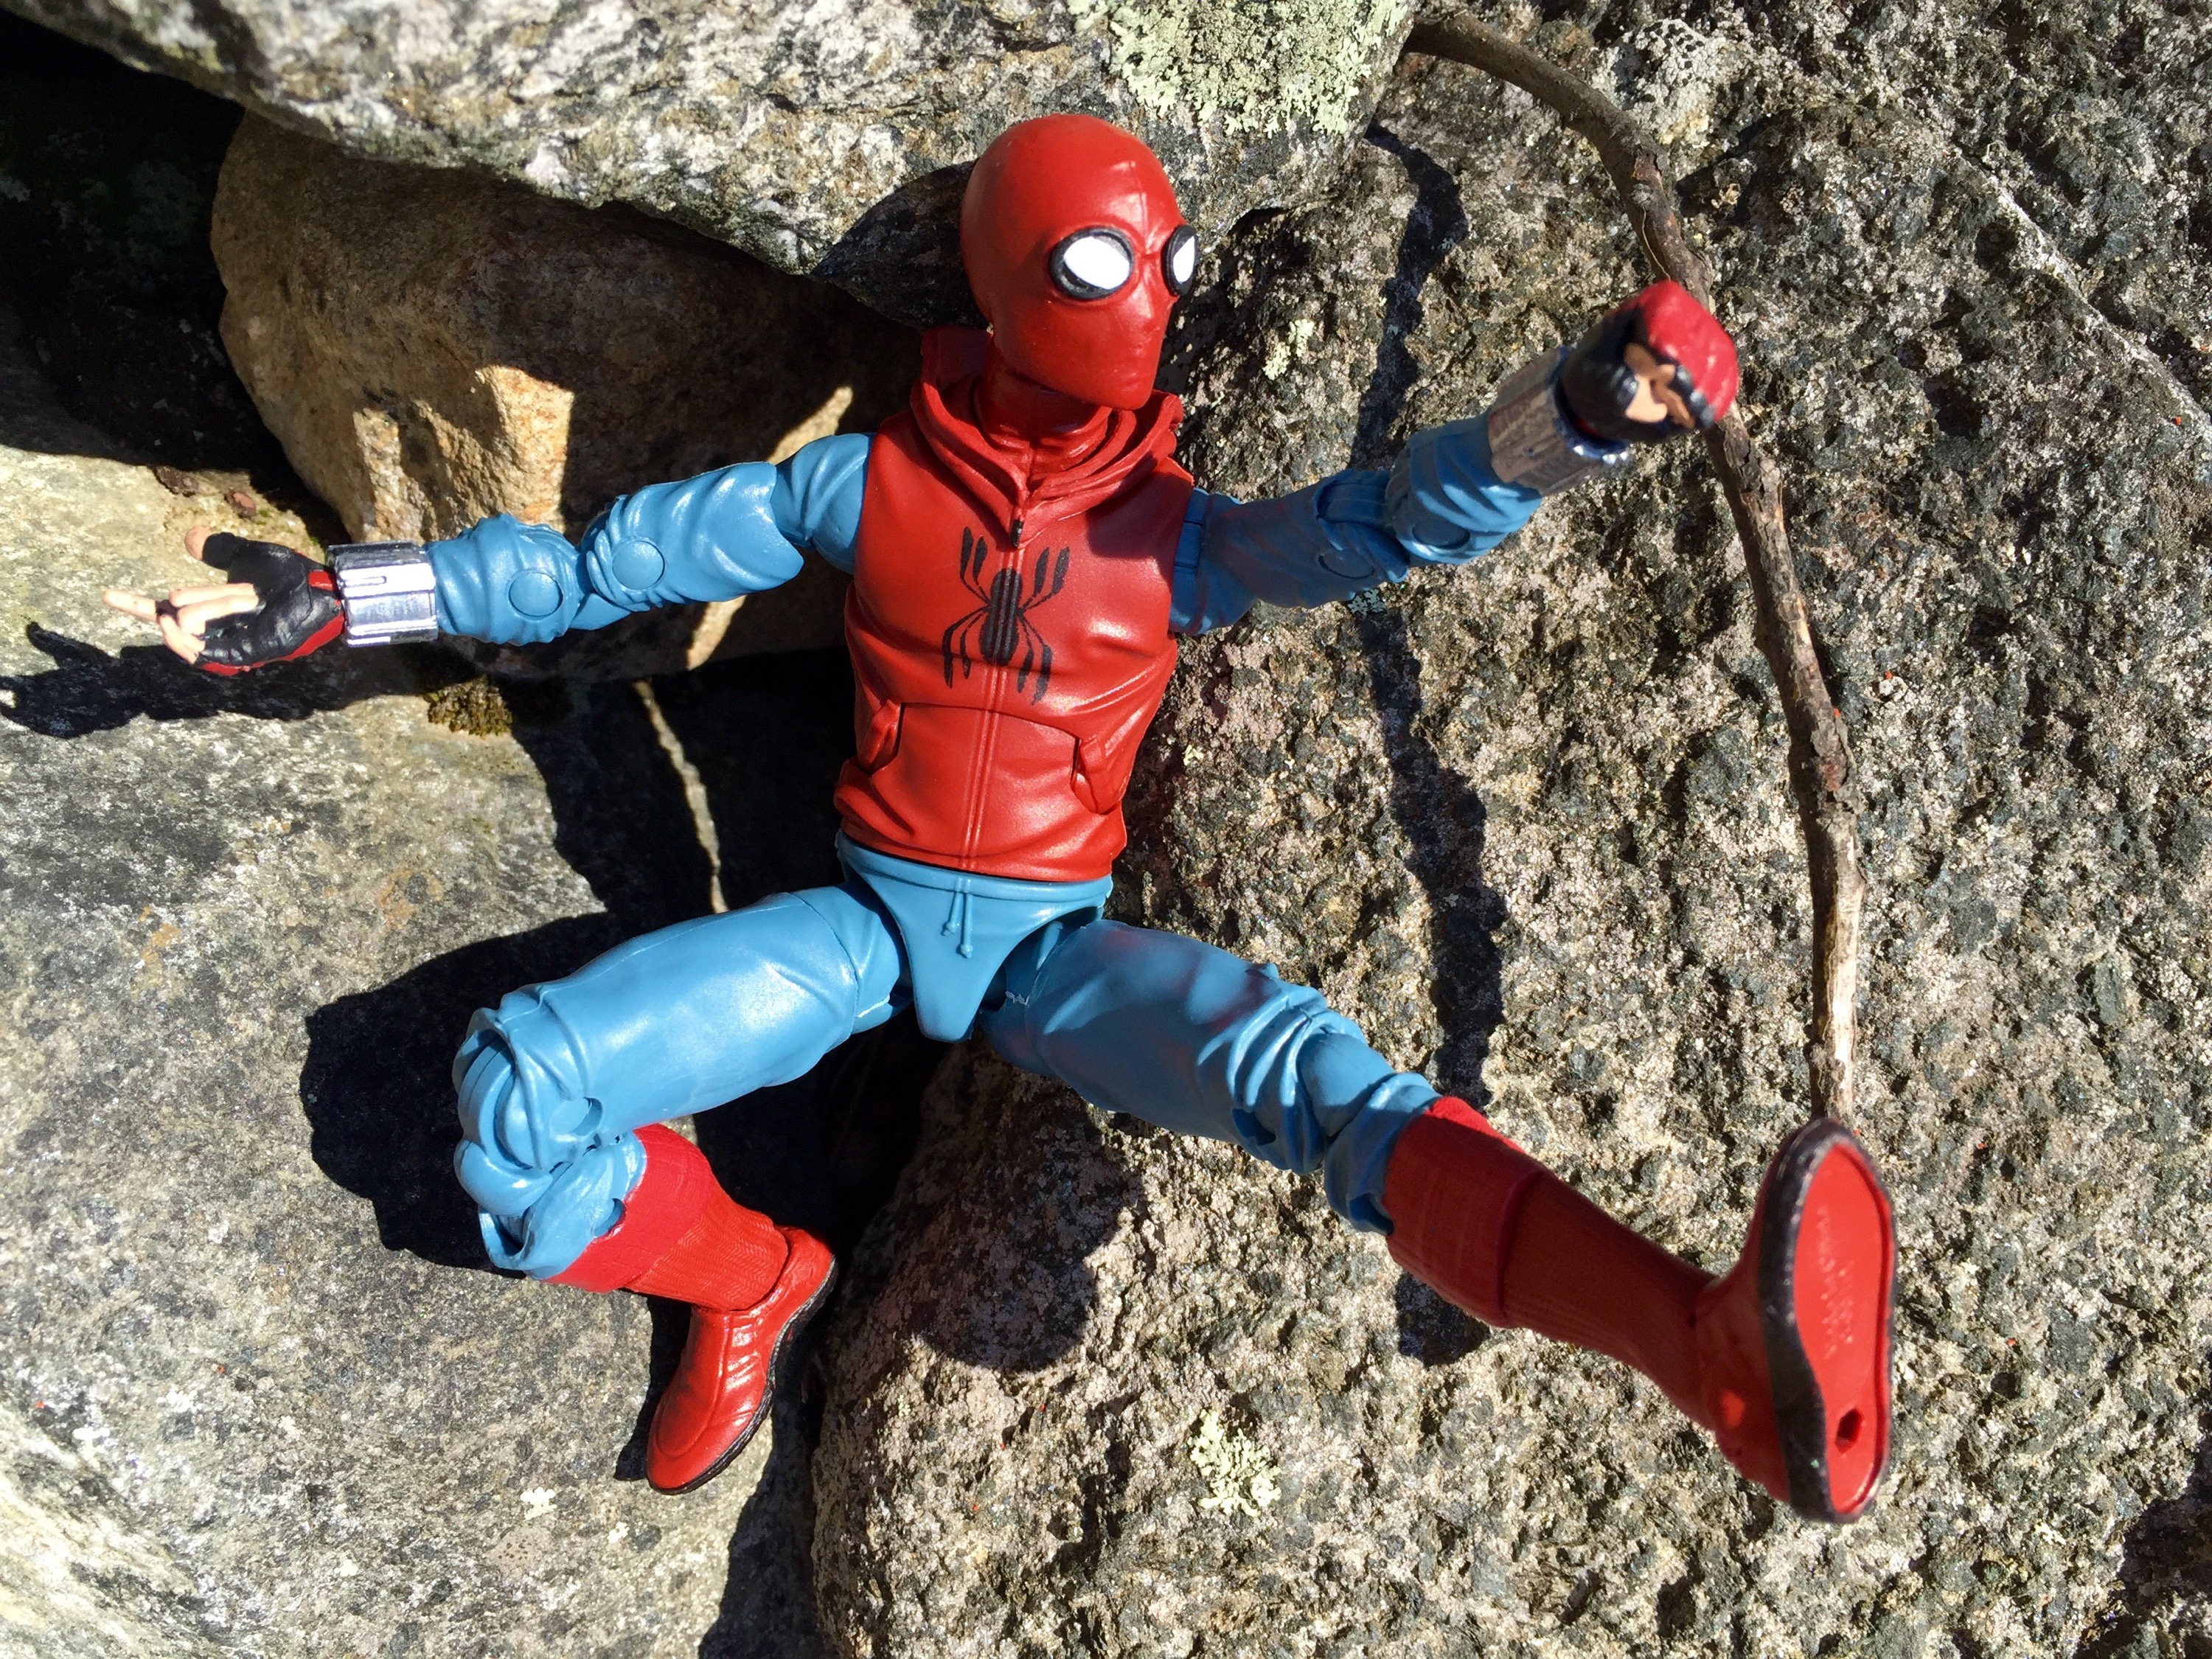 marvel legends spider man homecoming homemade suit